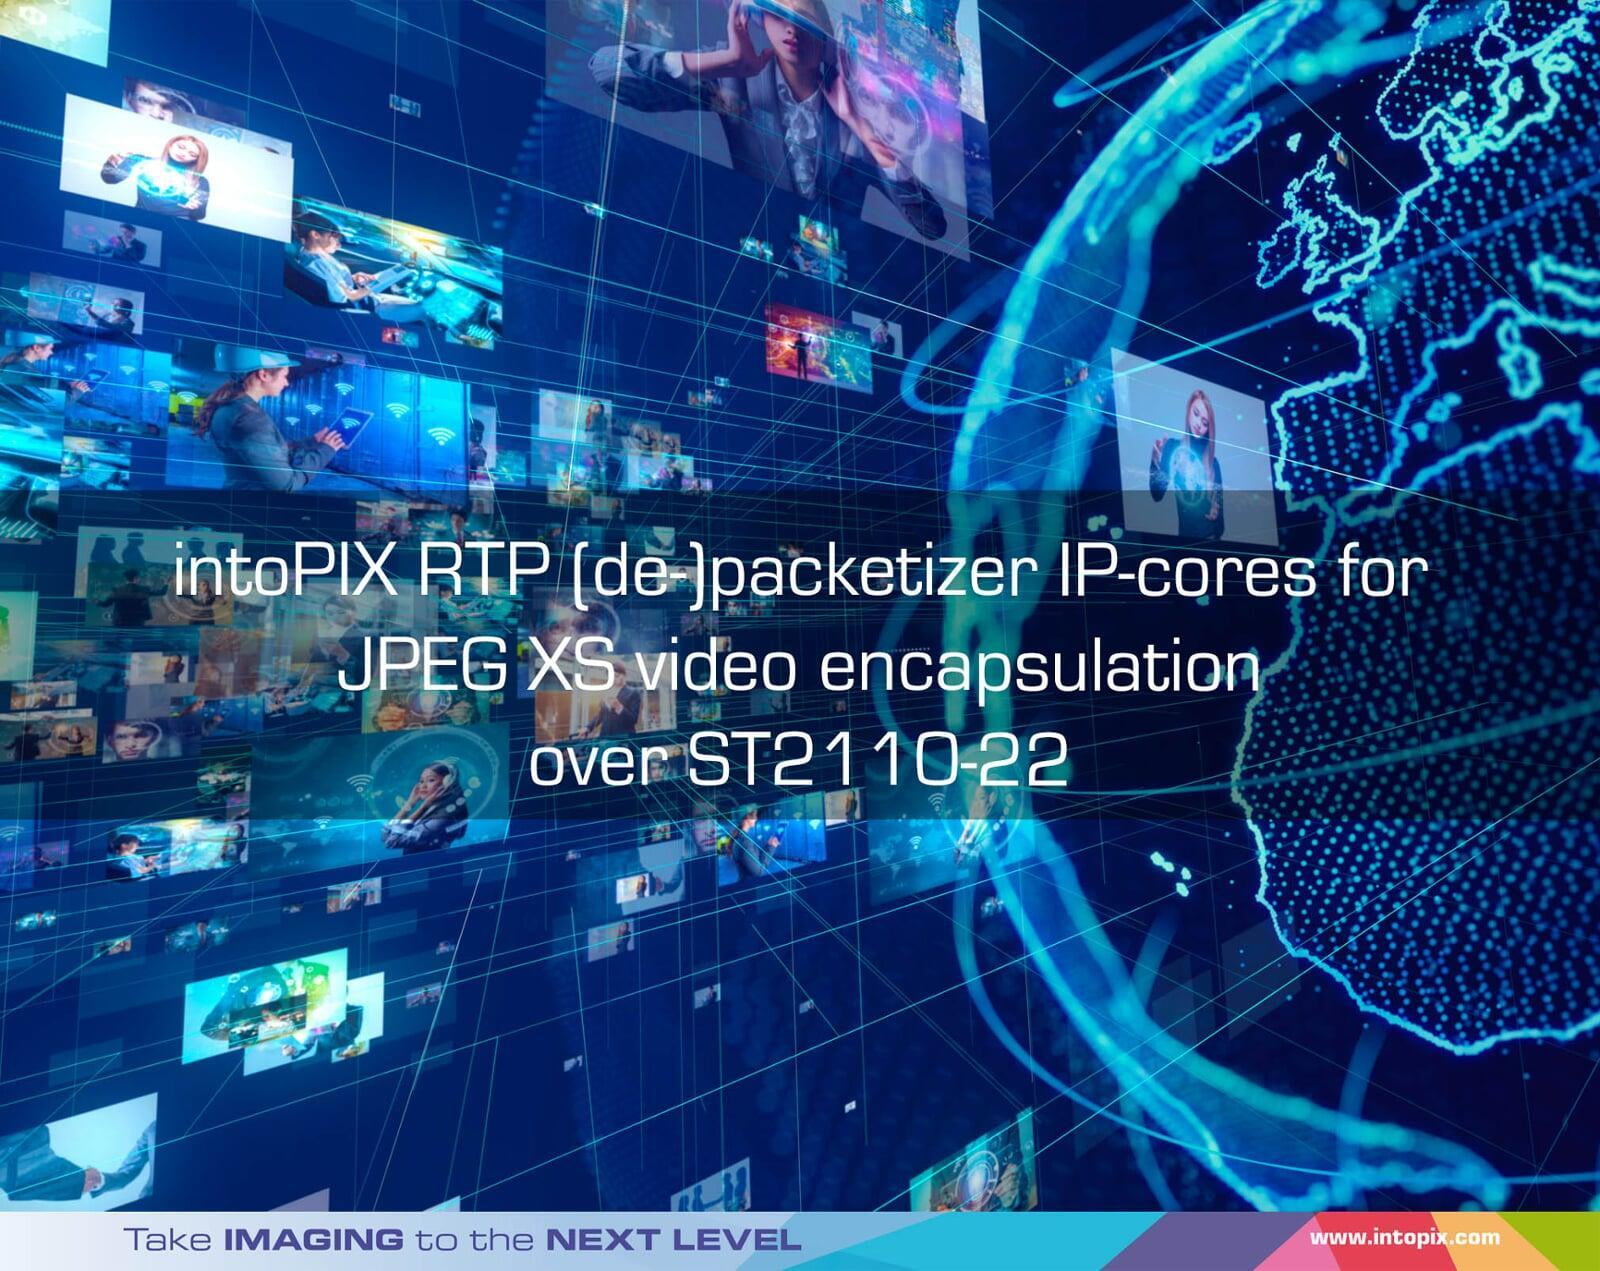 intoPIXは、SMPTE 2110-22を介したJPEG XS Video Encapsulation用のRTP Paketization IPコアをリリース